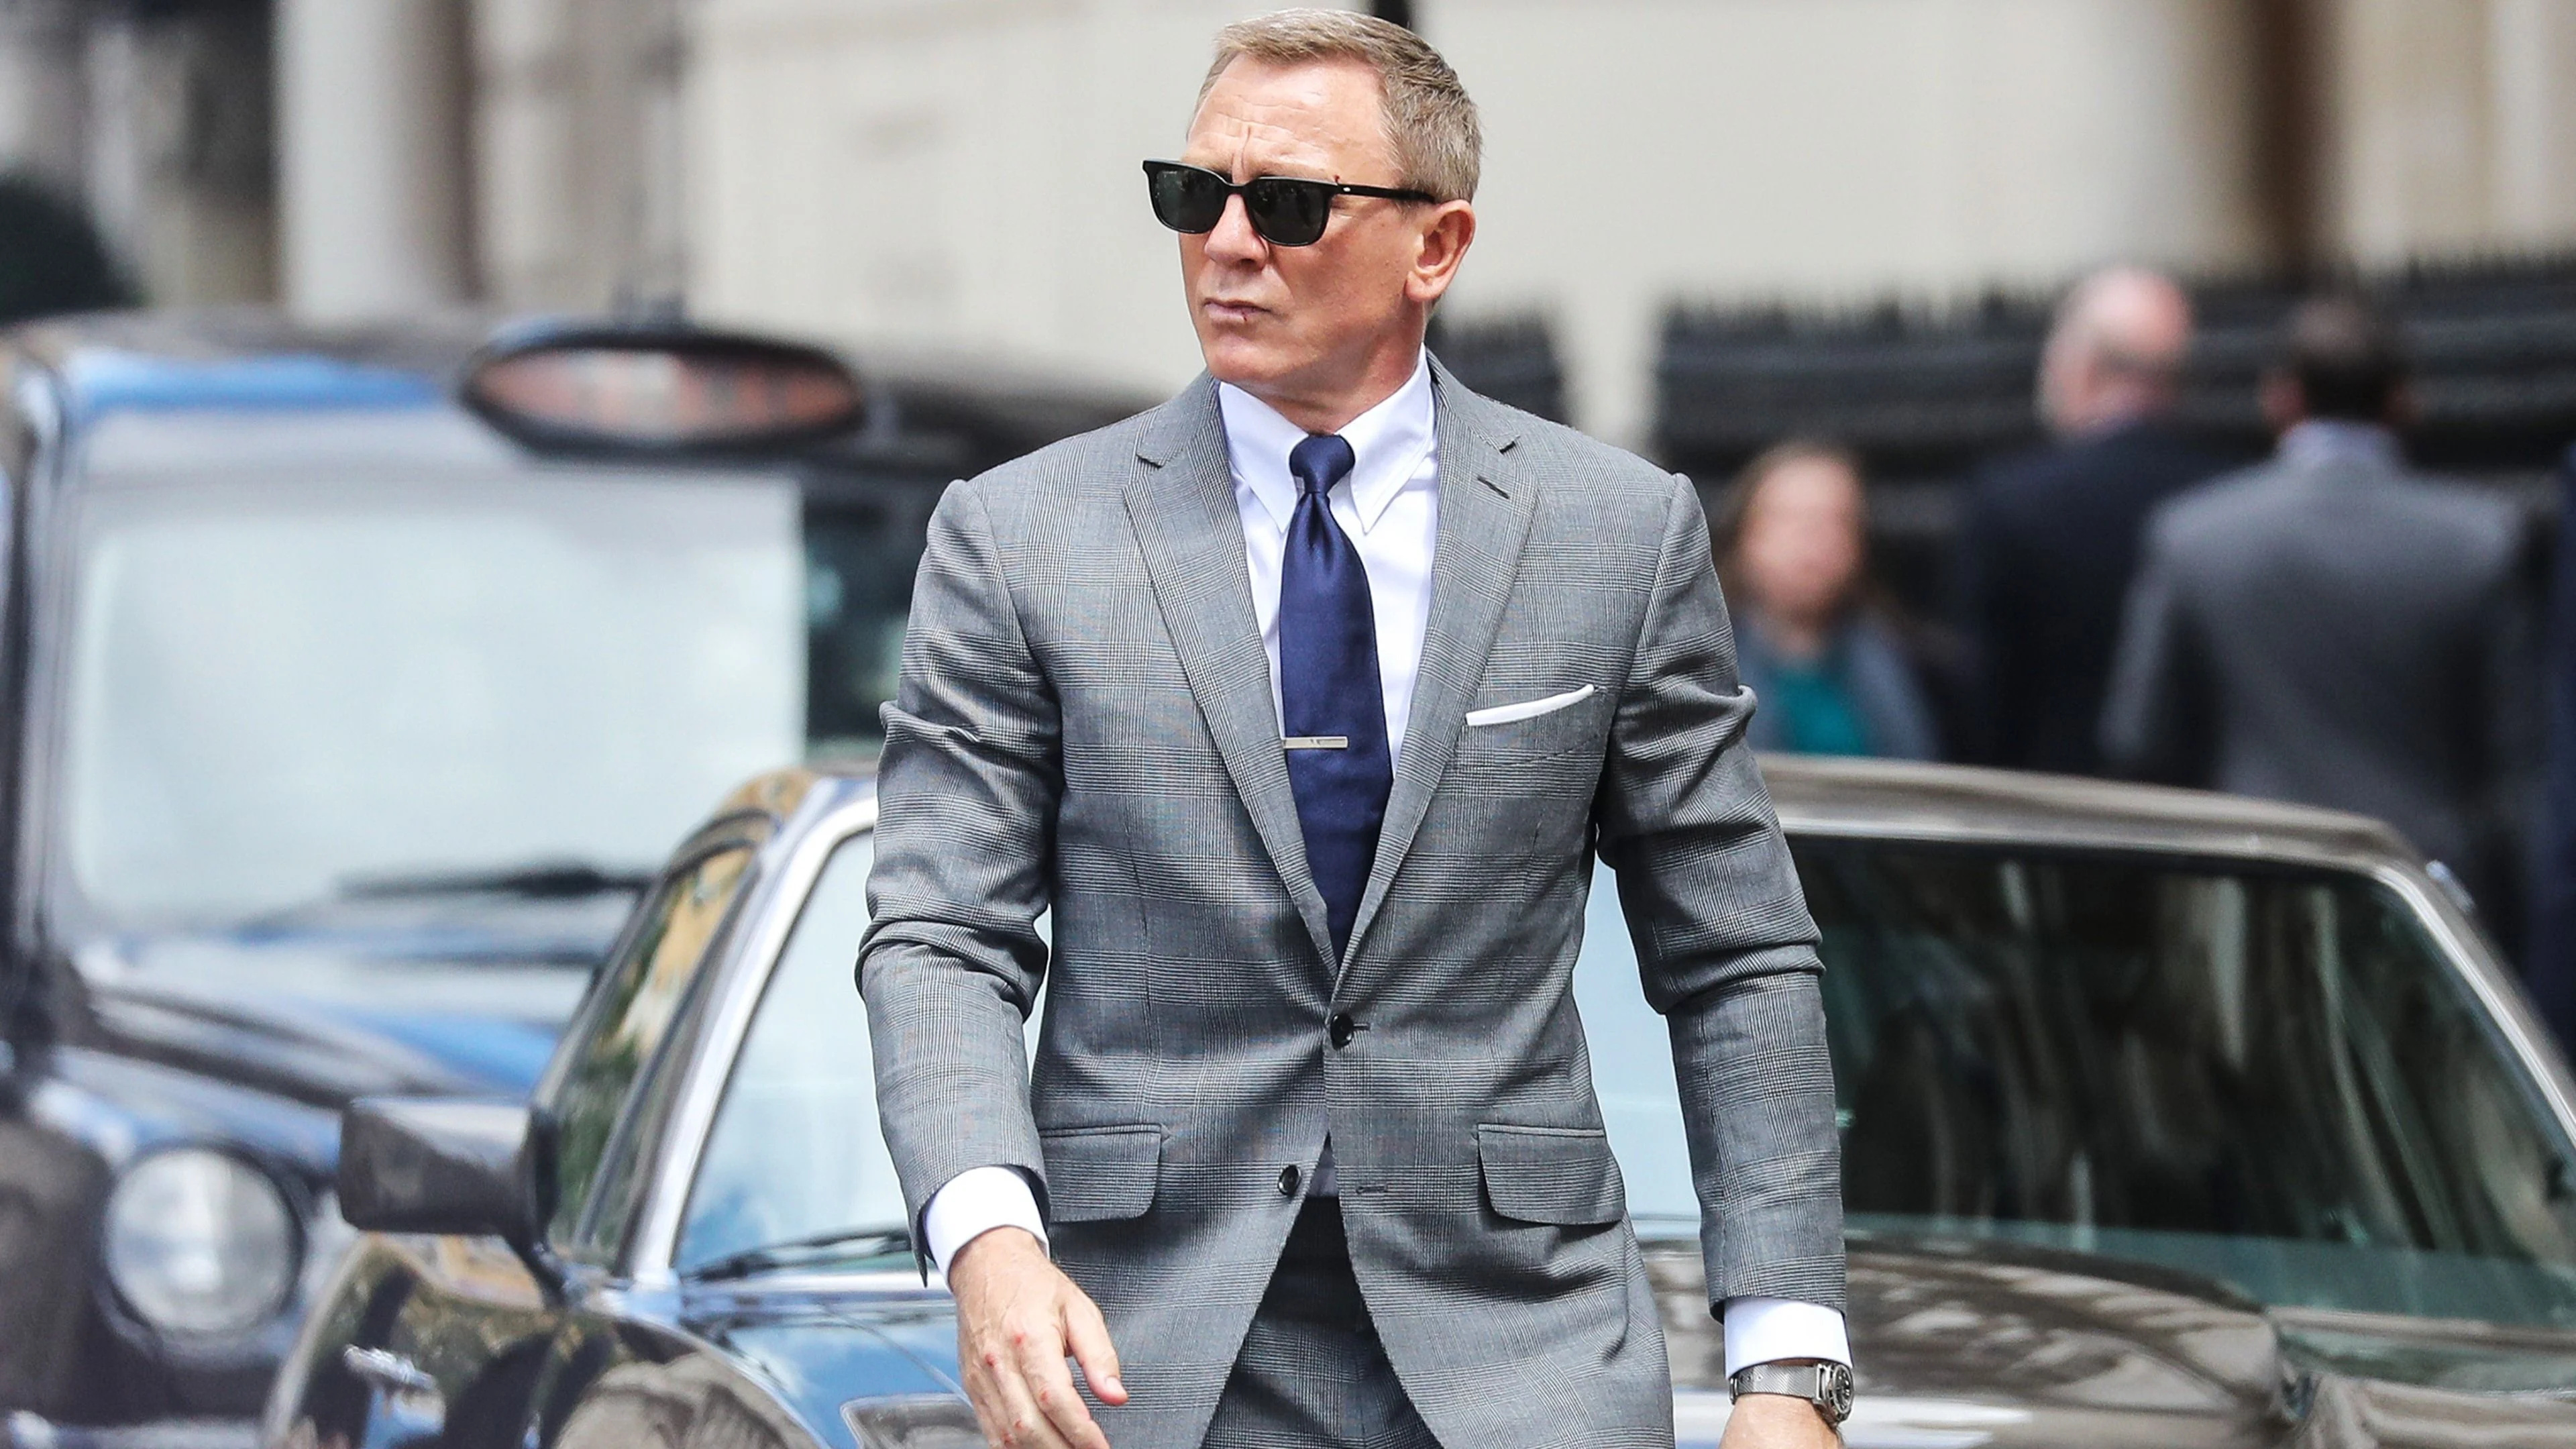 Daniel Craig: An English actor, The secret agent James Bond, No Time To Die. 3840x2160 4K Wallpaper.